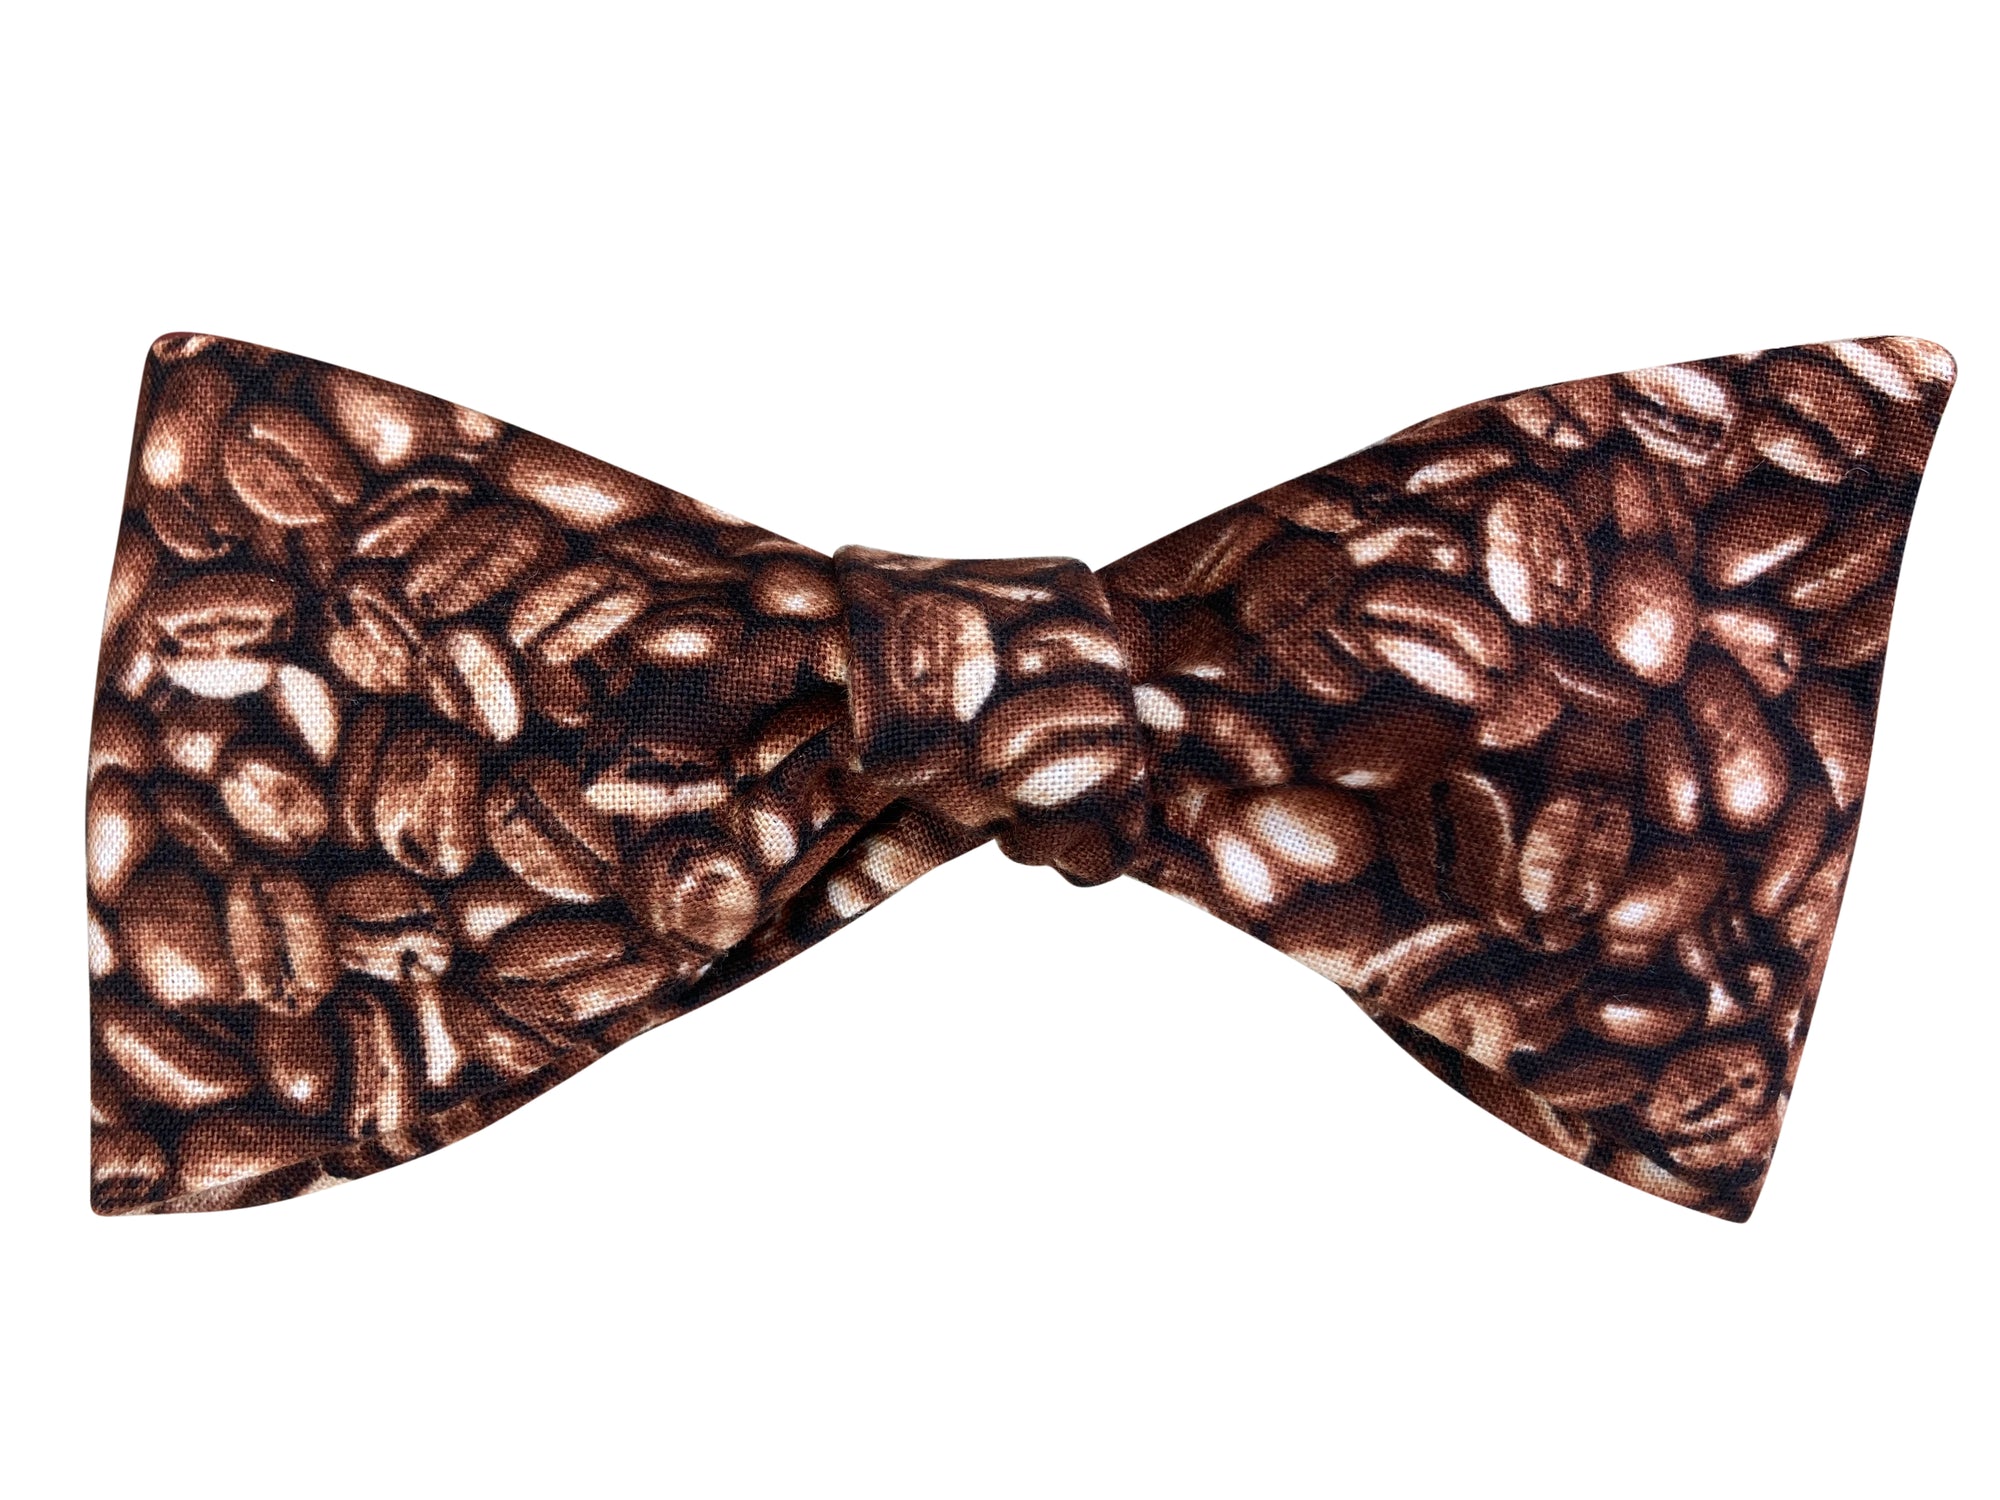 Barista coffee beans self tie bow tie